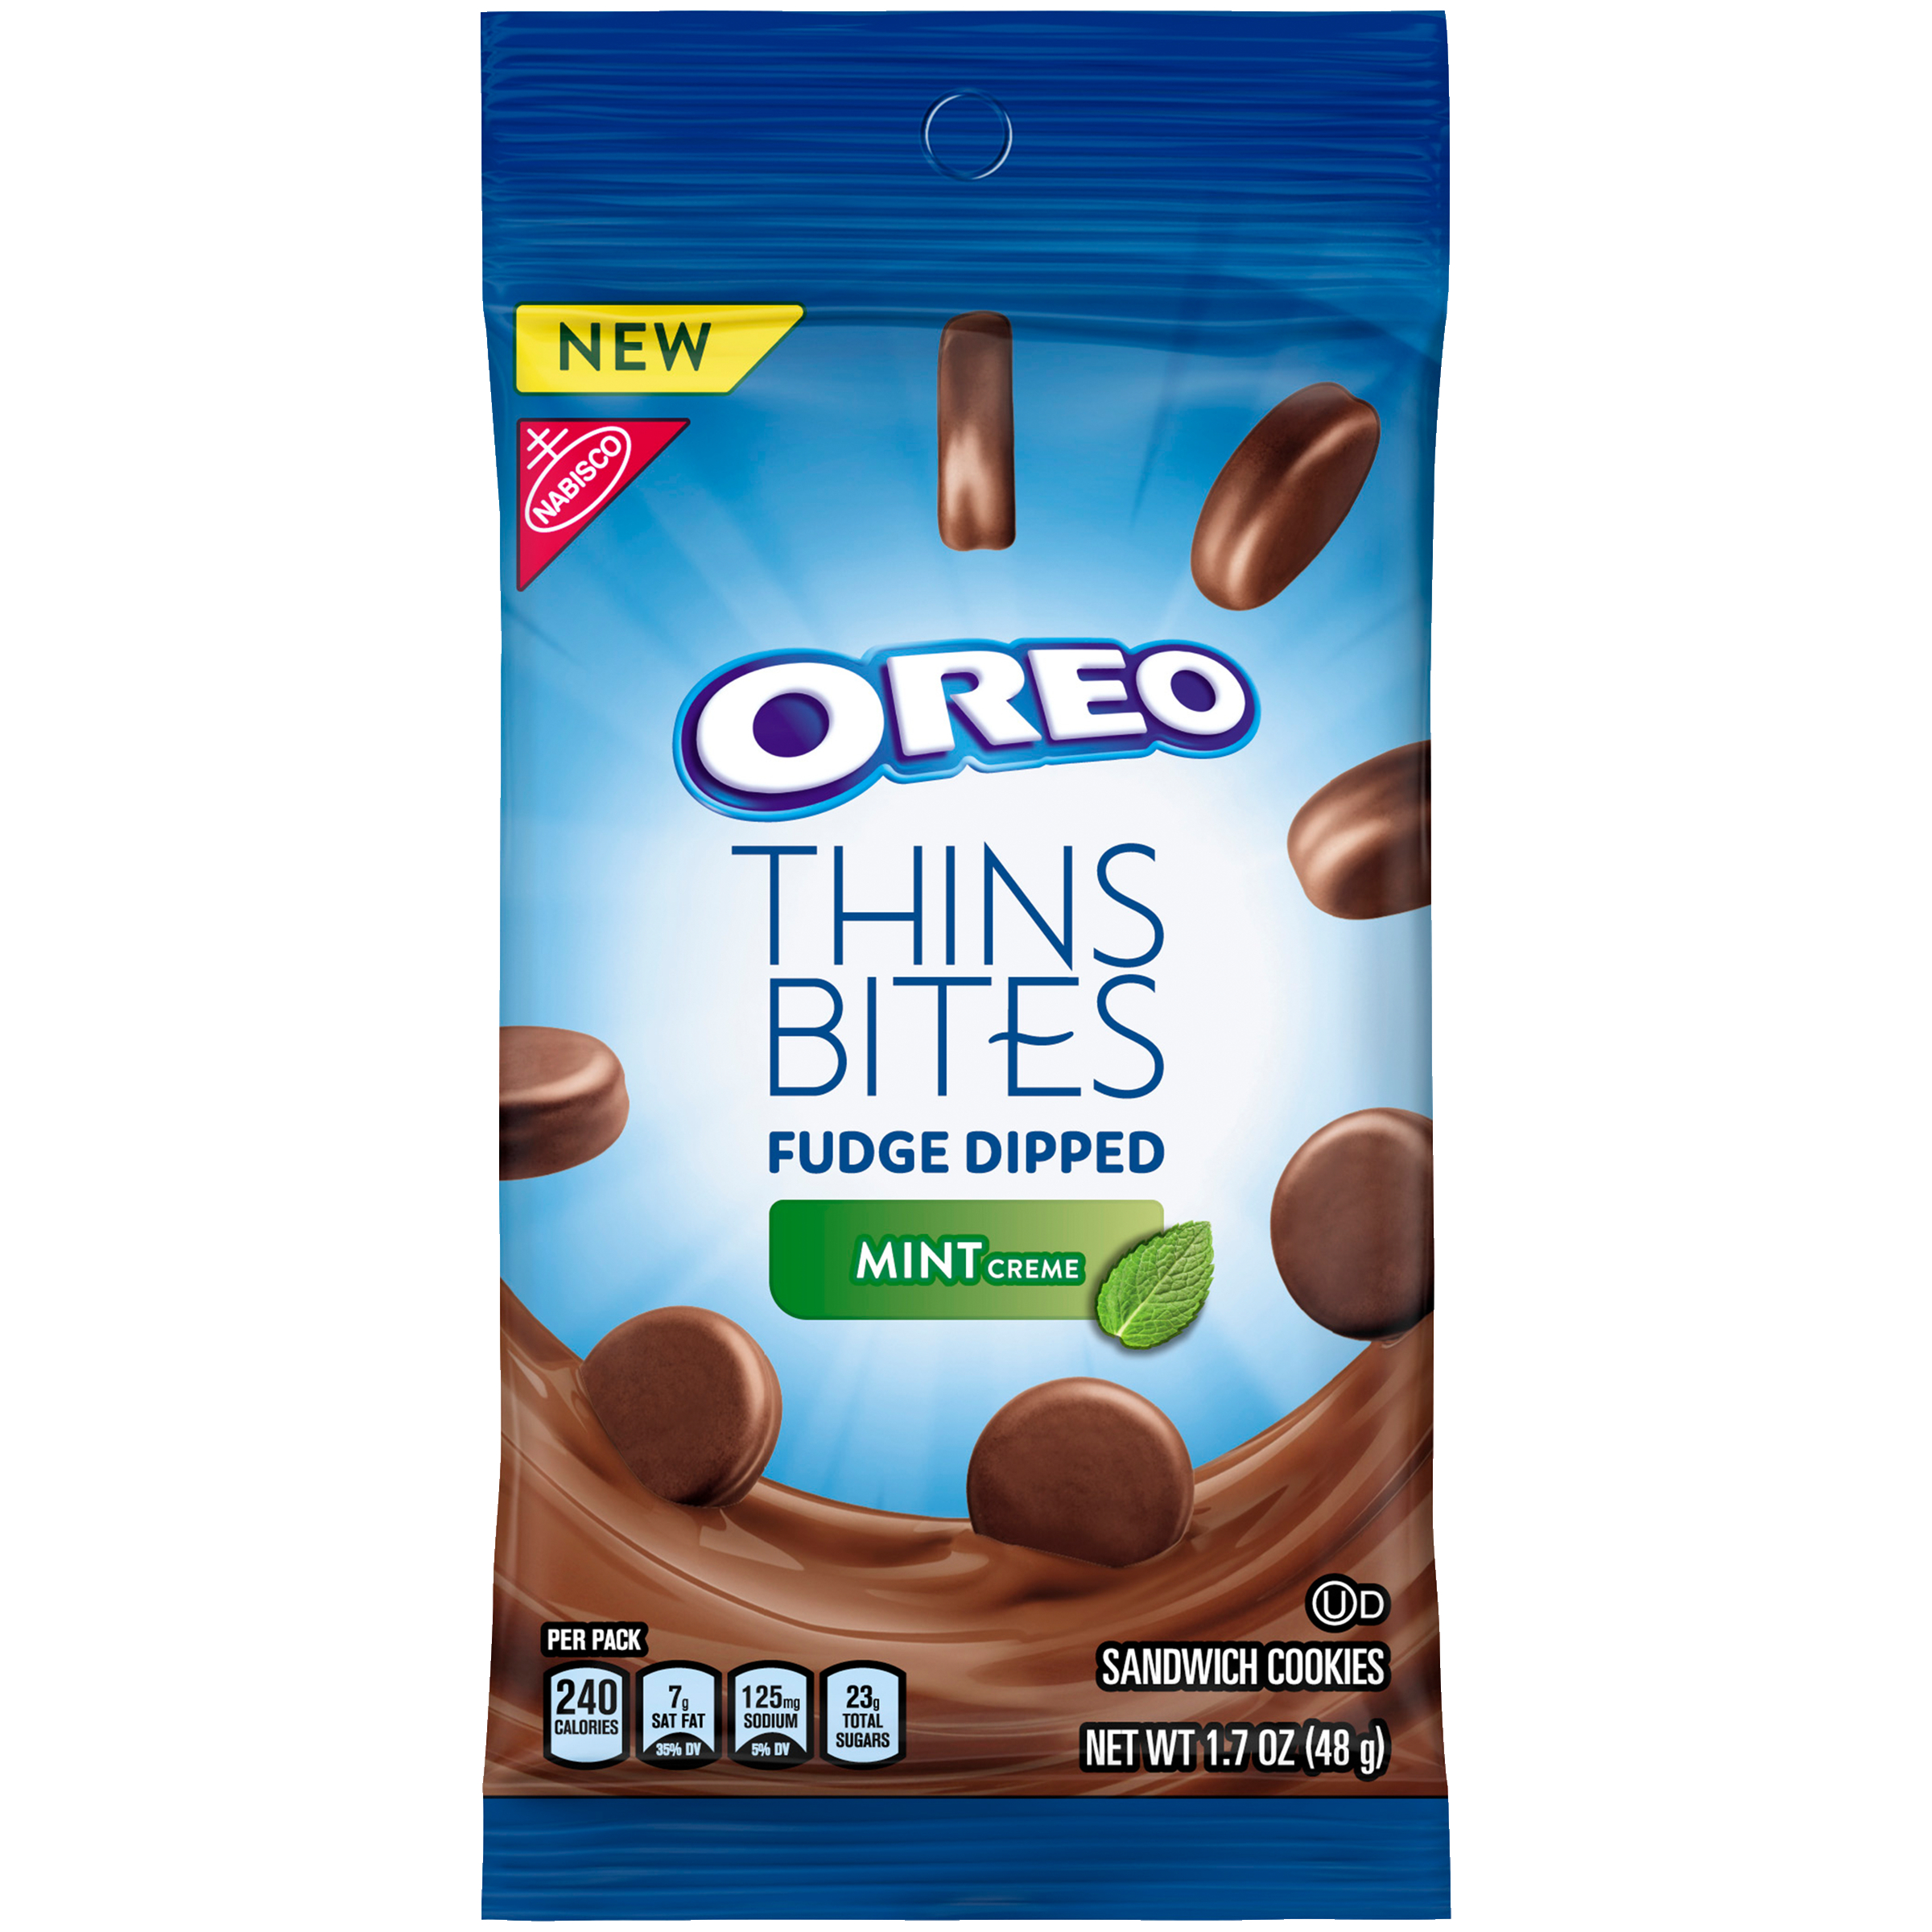 OREO Thins Bites Fudge Dipped Cookies - Mint Creme 4/1.7OZ